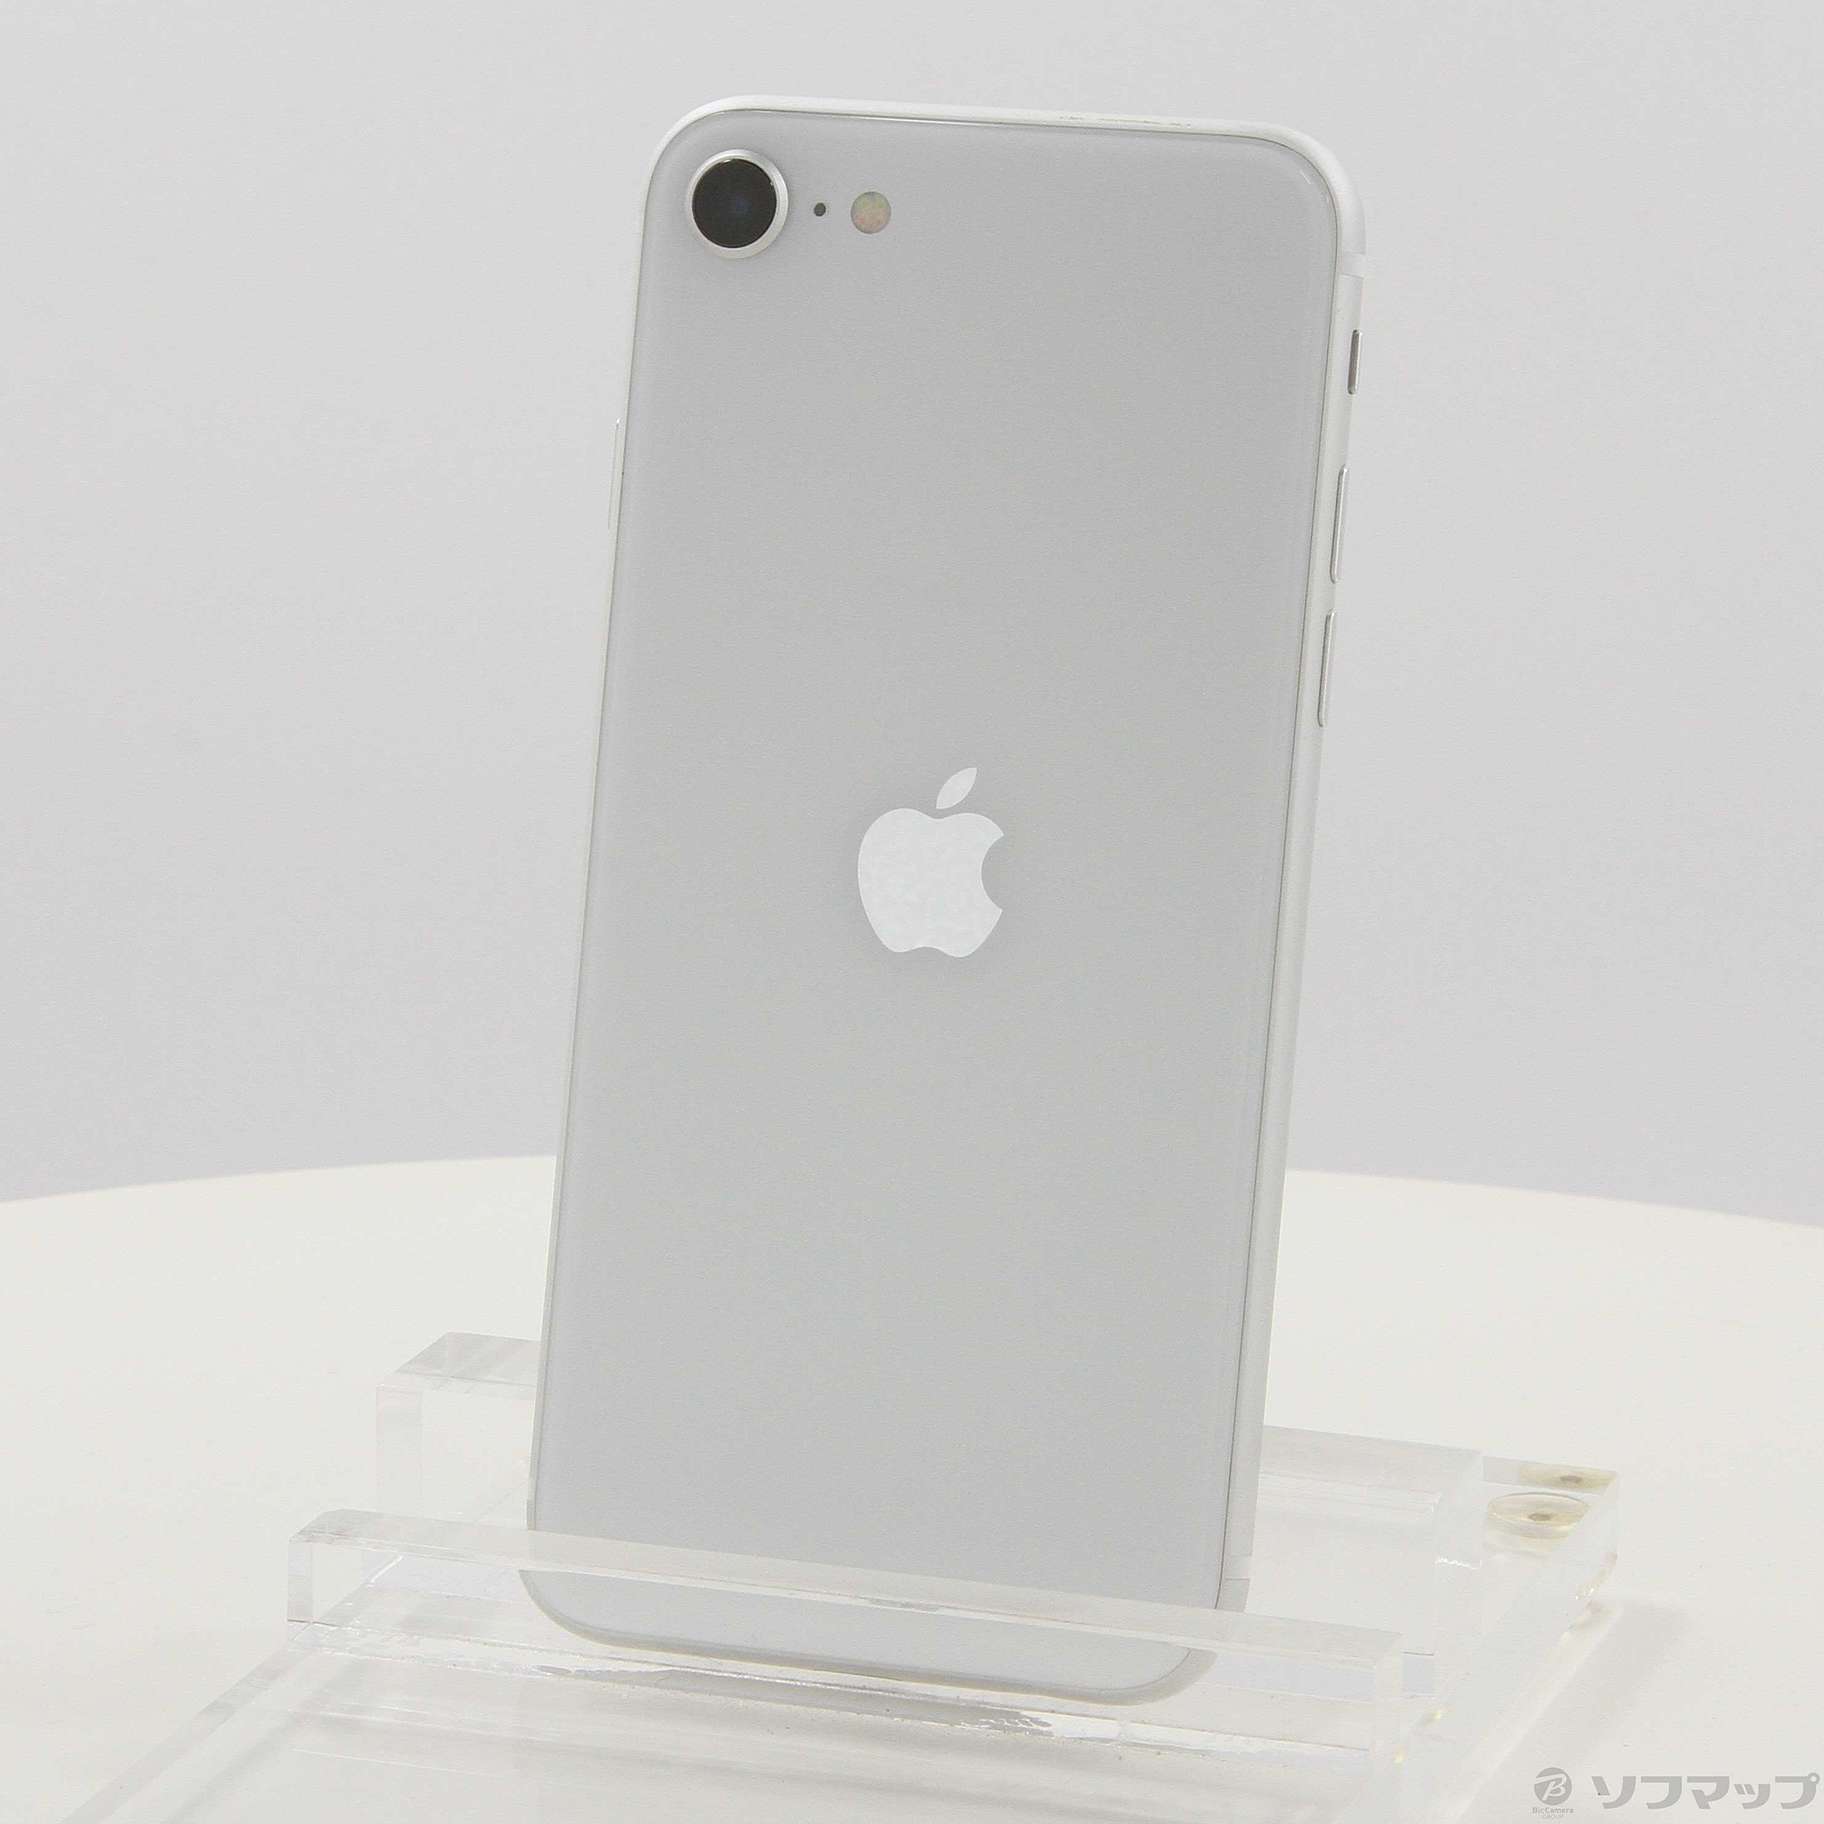 iPhone SE 第2世代 (SE2) ホワイト 128GB機種名iPhoneSE第2世代